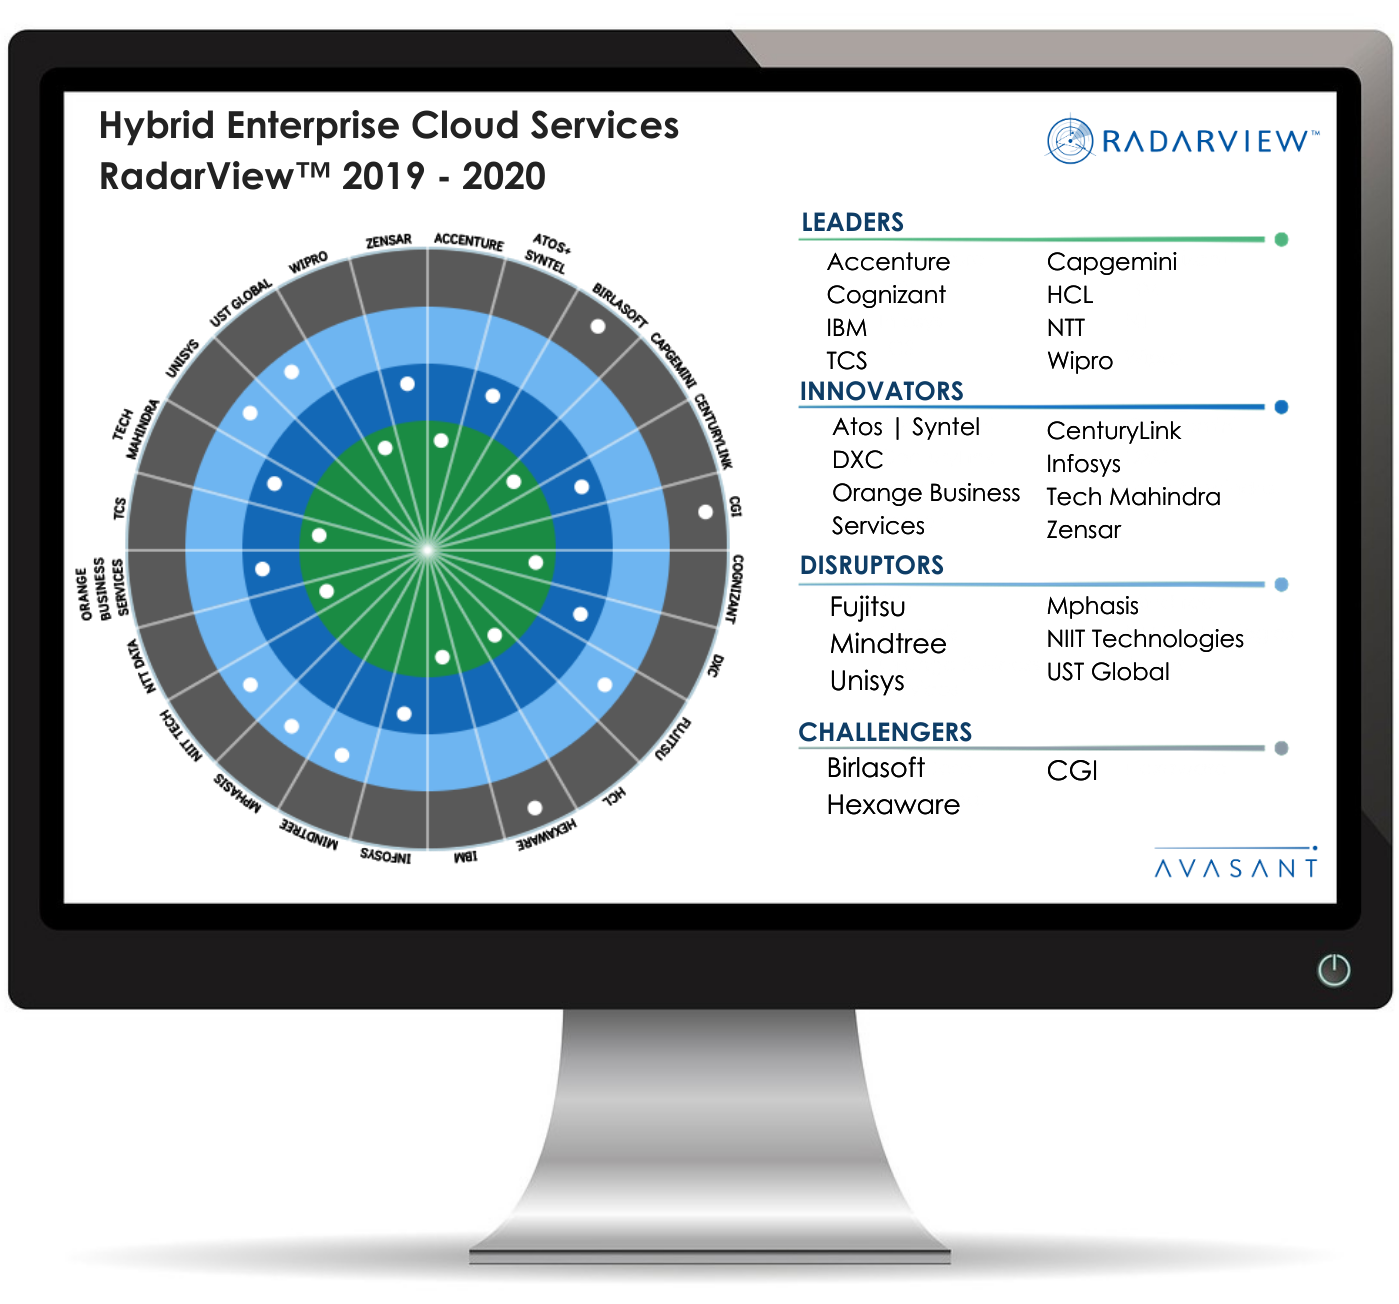 HEC Web Graphic - Hybrid Enterprise Cloud Services RadarView™ 2019-2020 - Capgemini